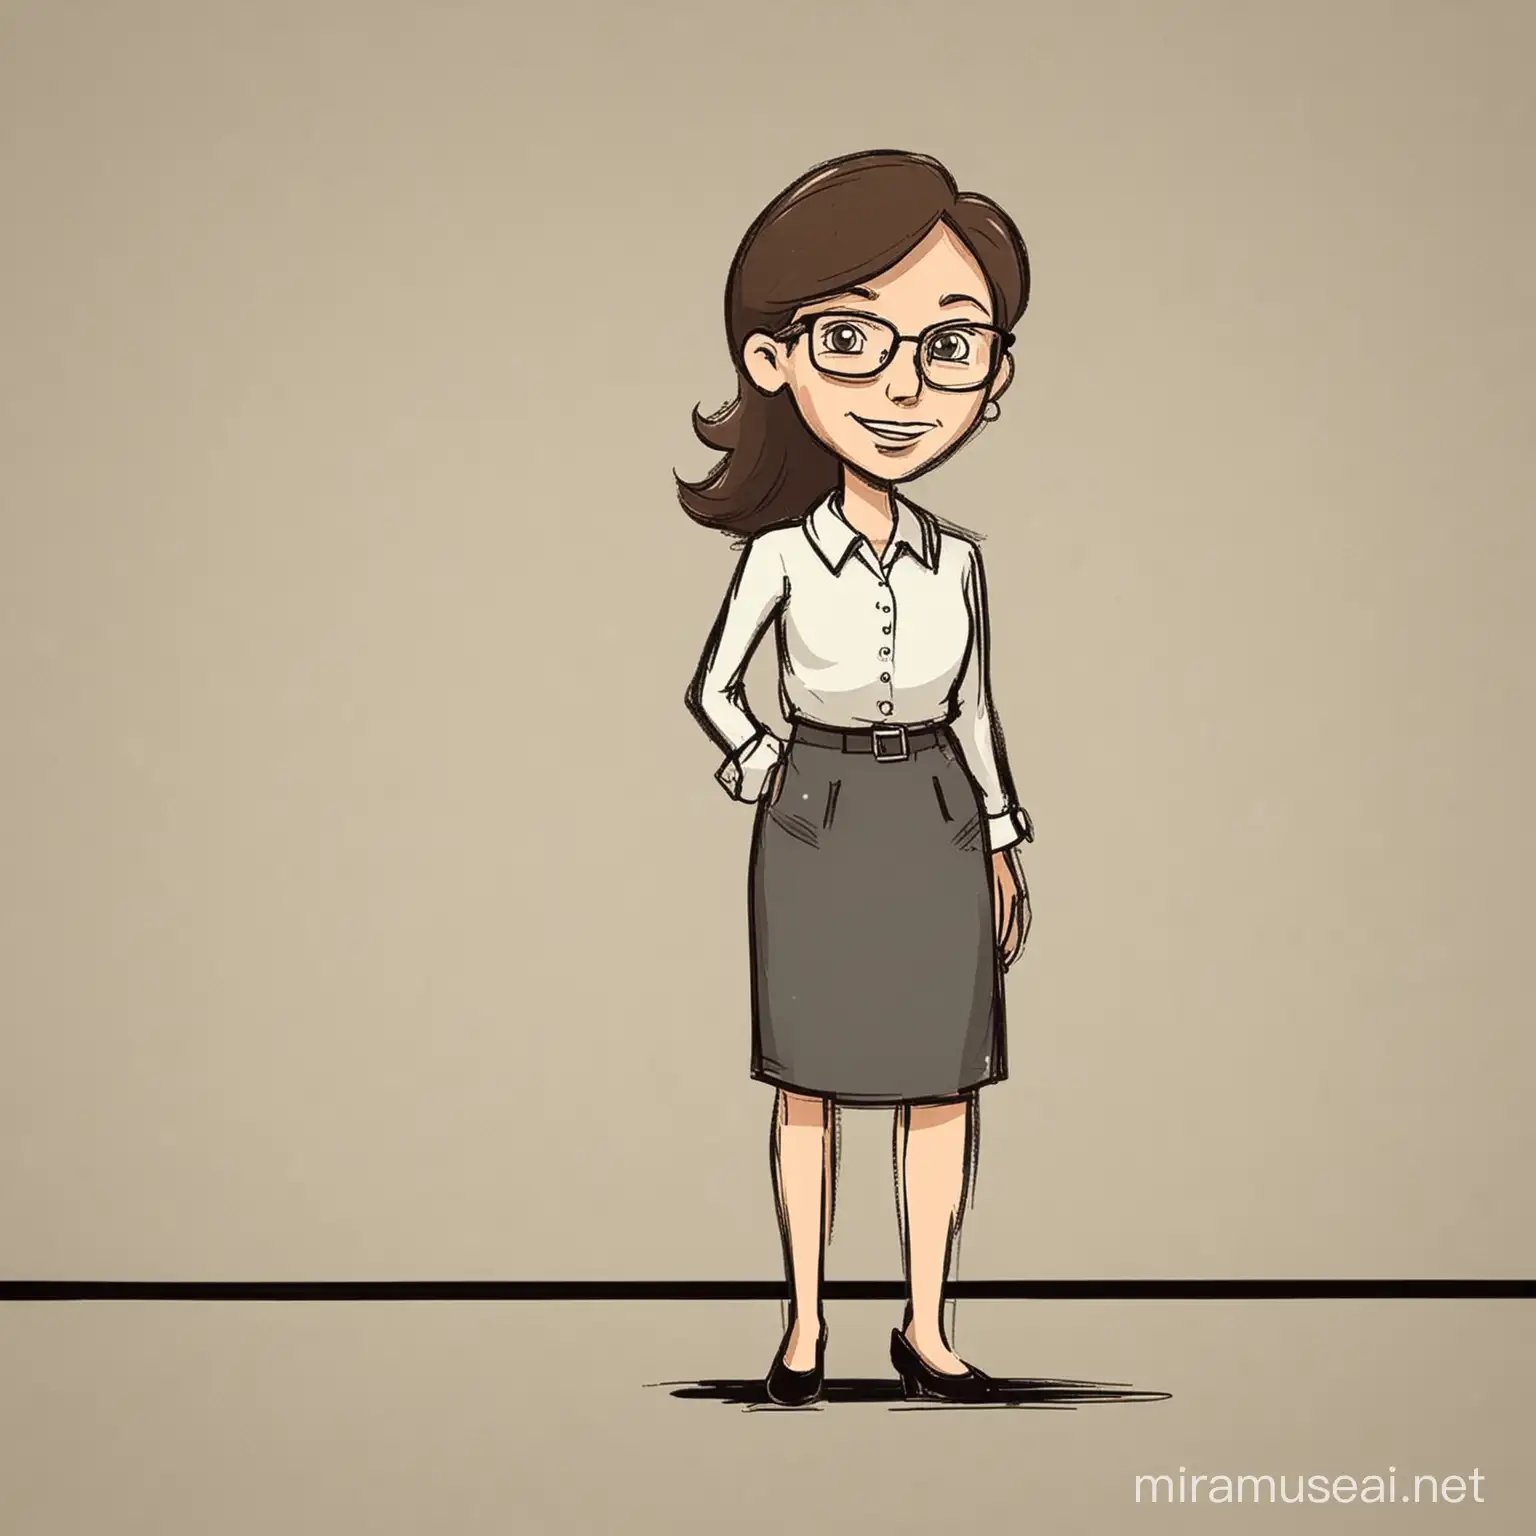 Cartoon of simple teacher standing